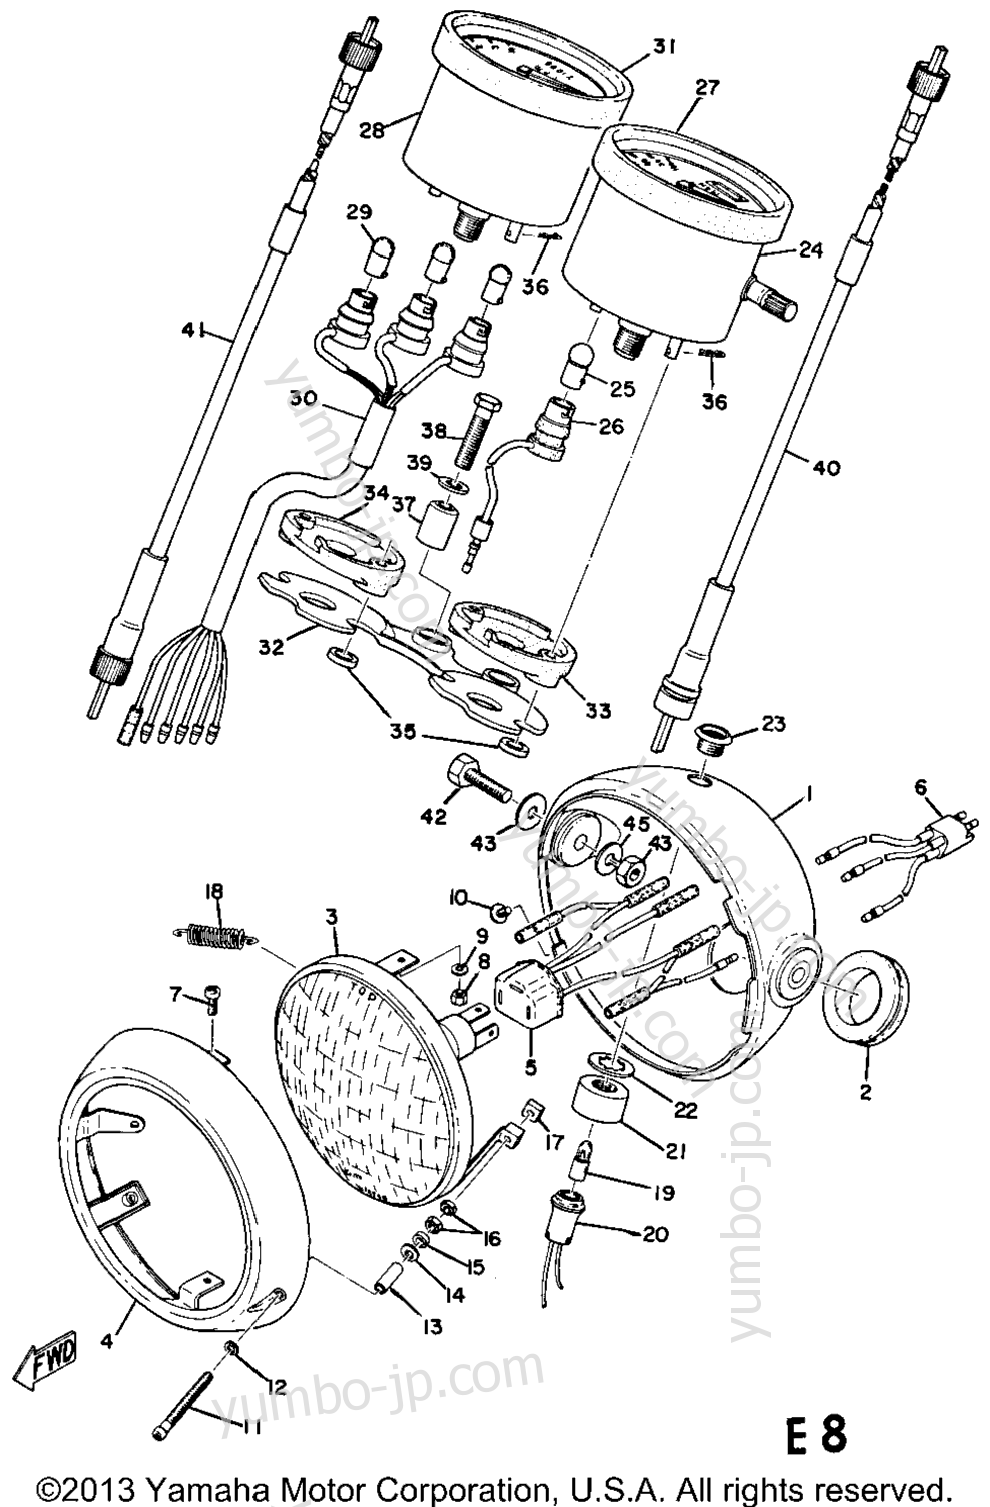 Head Lamp, Speedometer & Tachometer (At1c) for motorcycles YAMAHA CT1C CA 1971 year